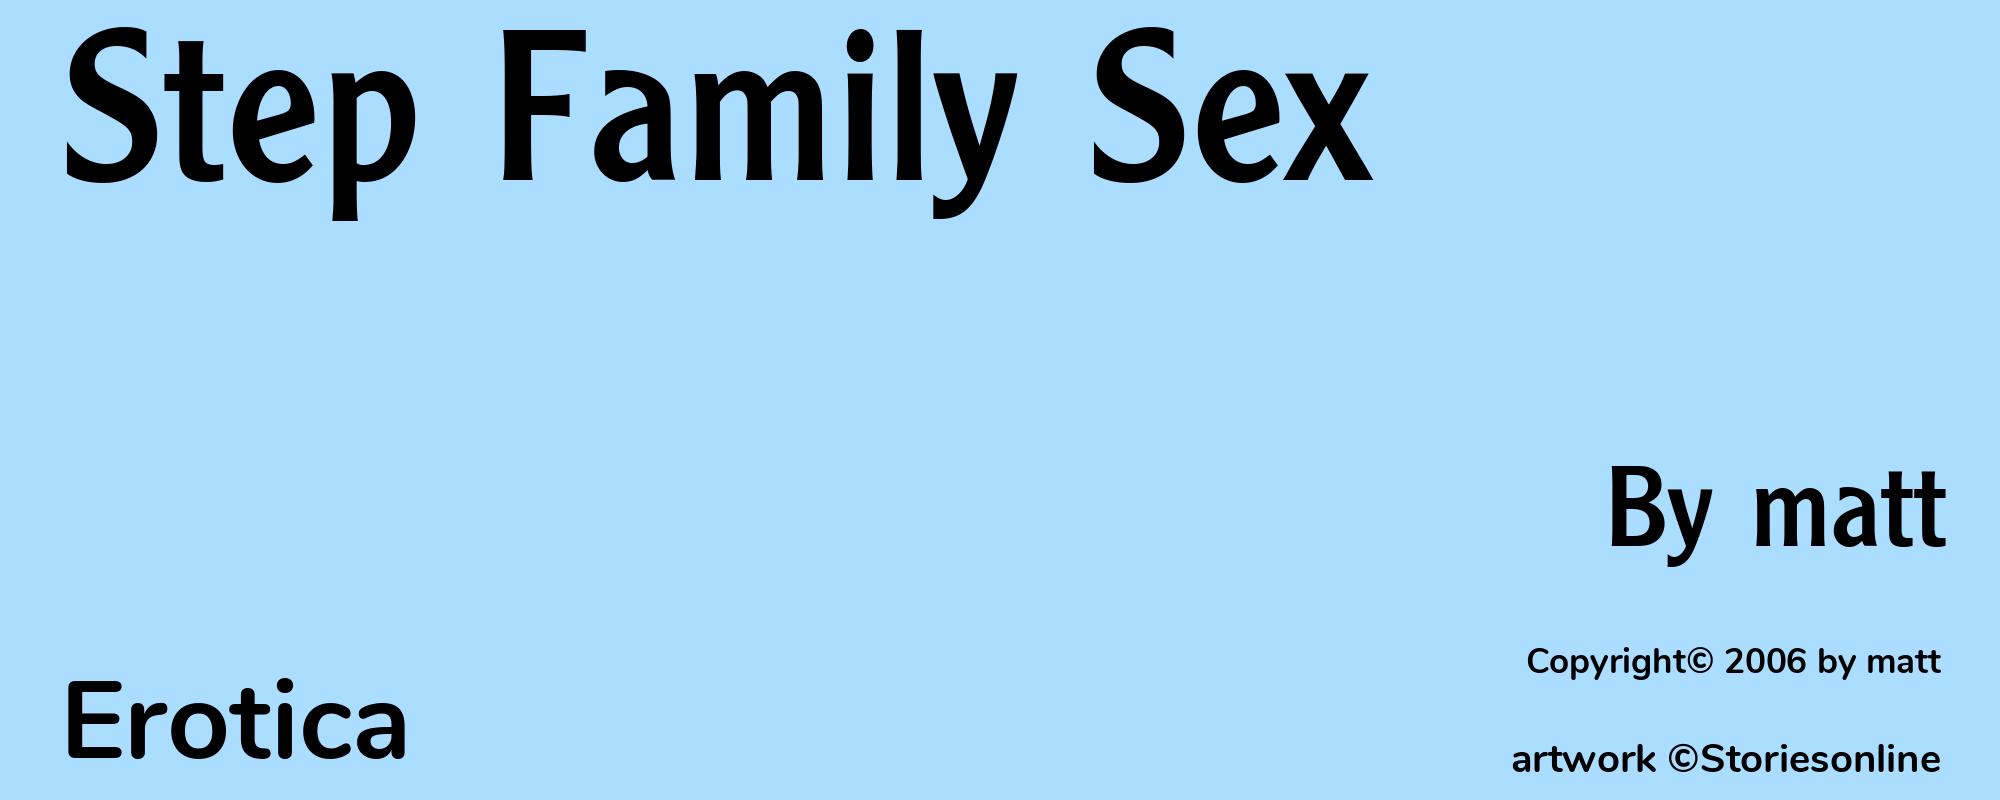 Step Family Sex - Cover